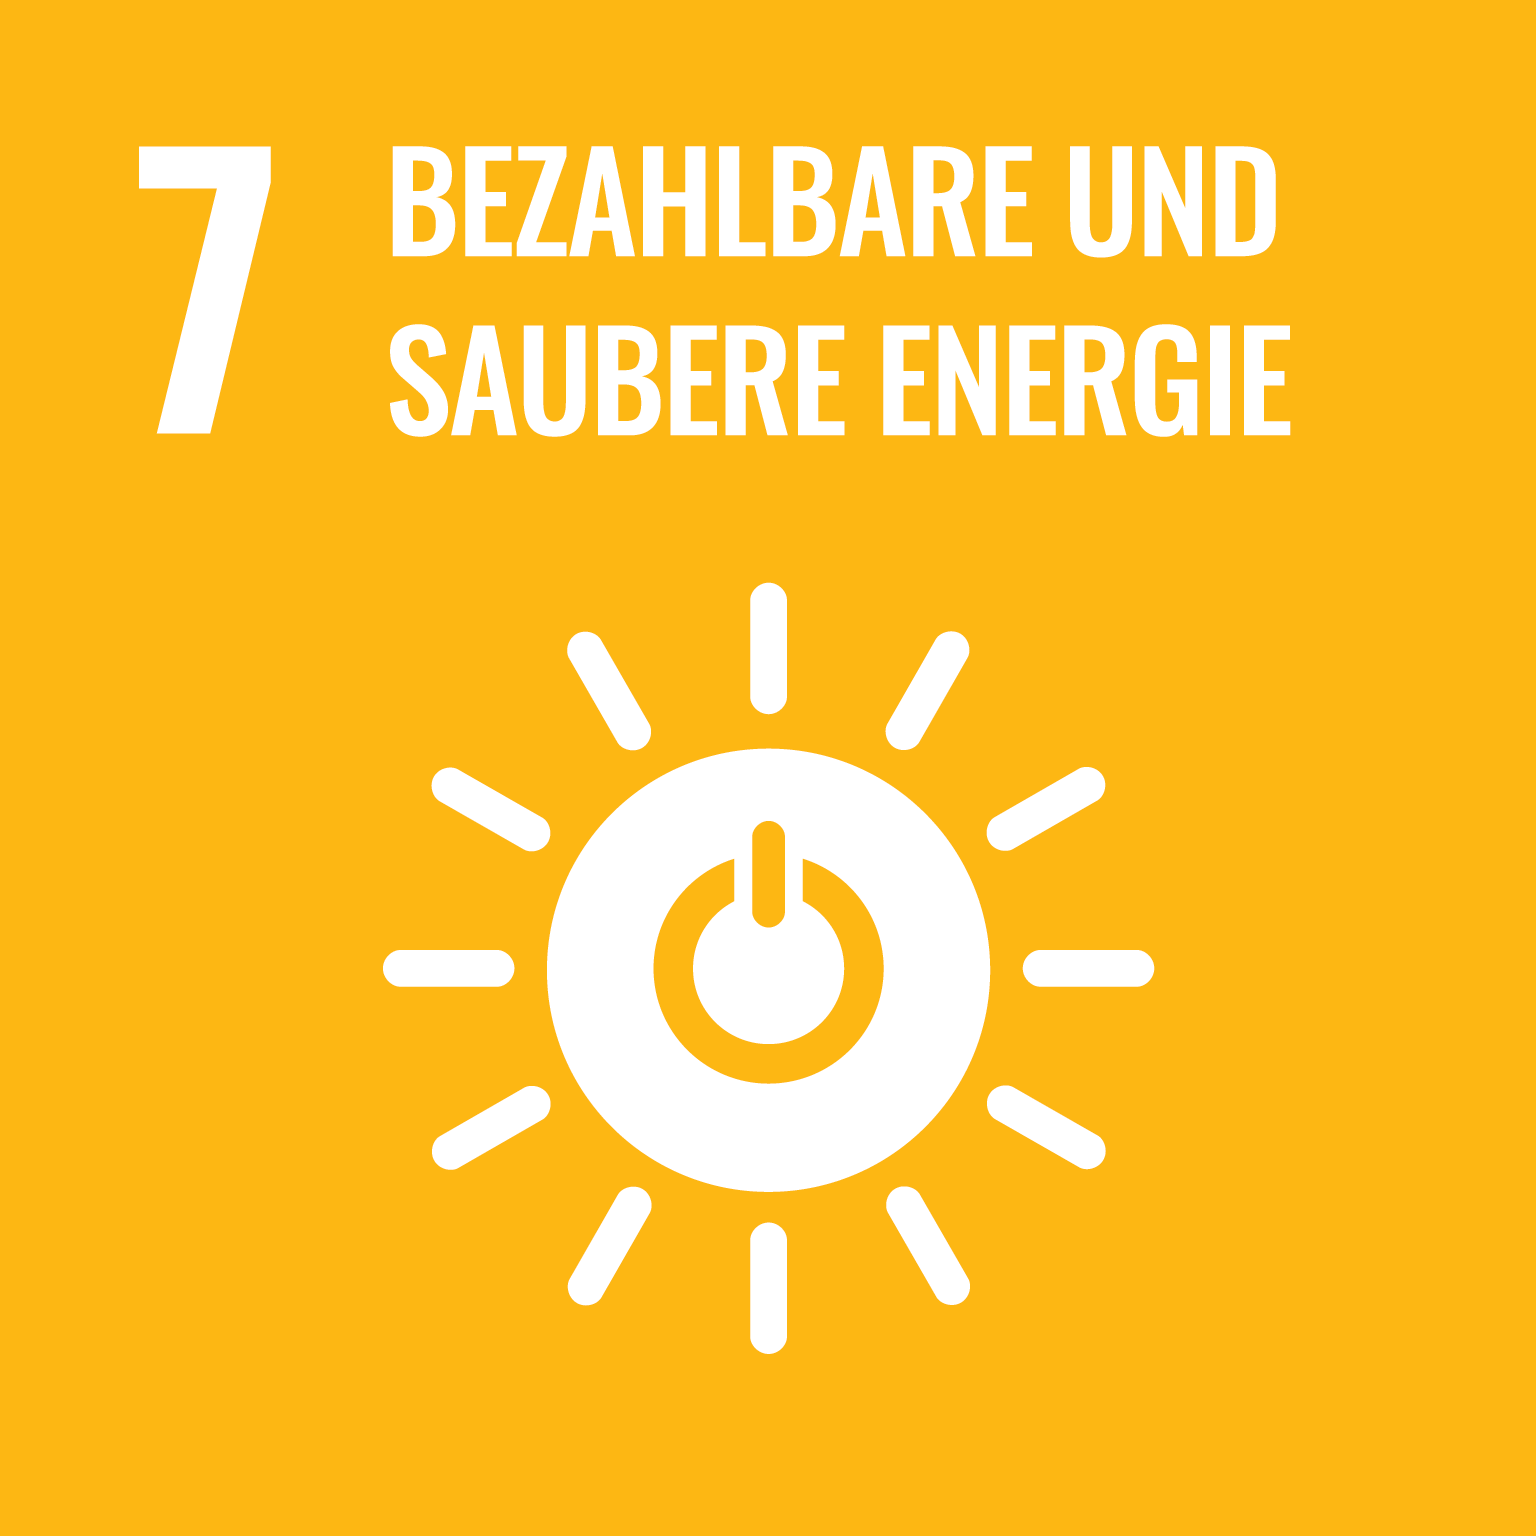 social development goal 7: saubere Energie